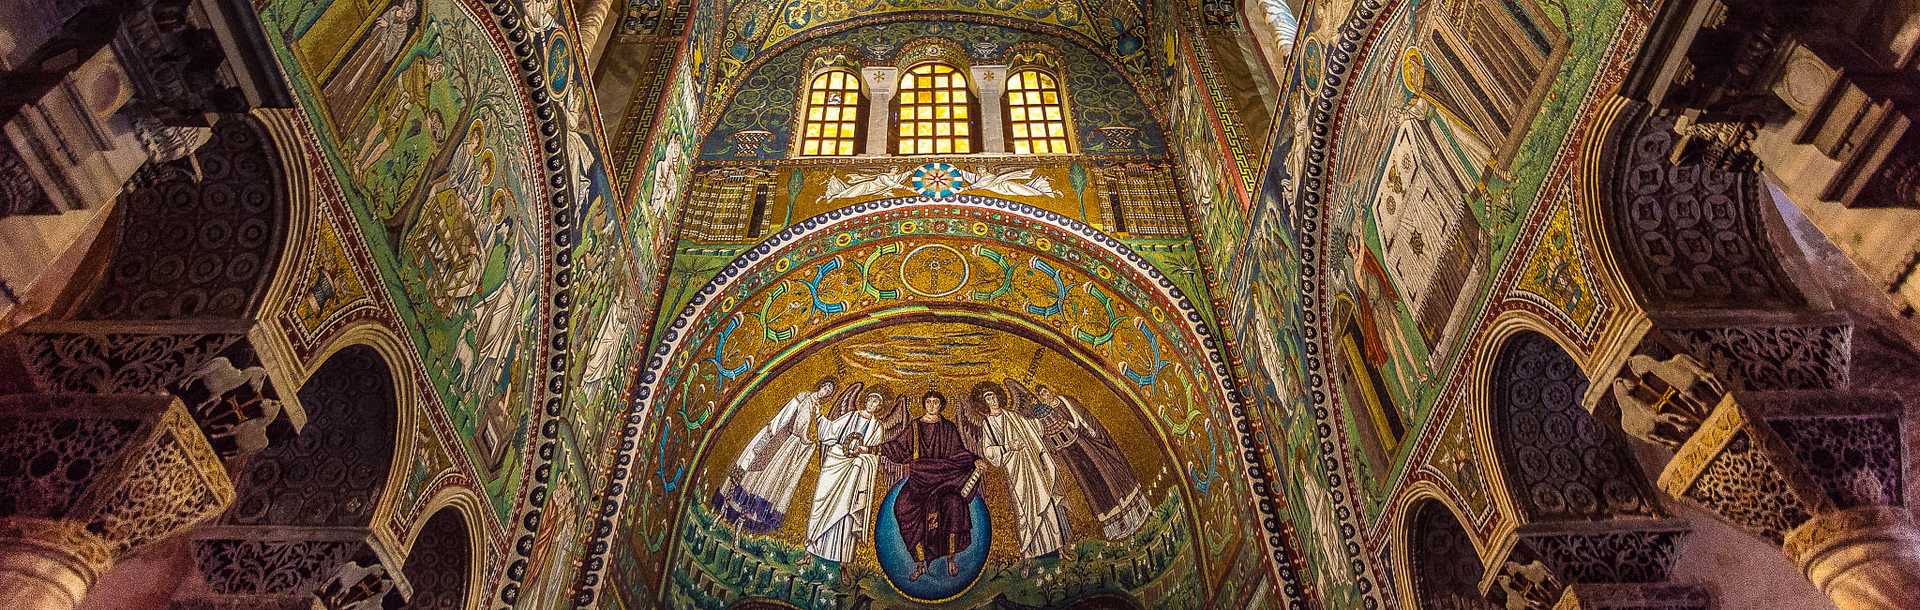 Mosaics at Basilica di San Vitale in Ravenna, Italy